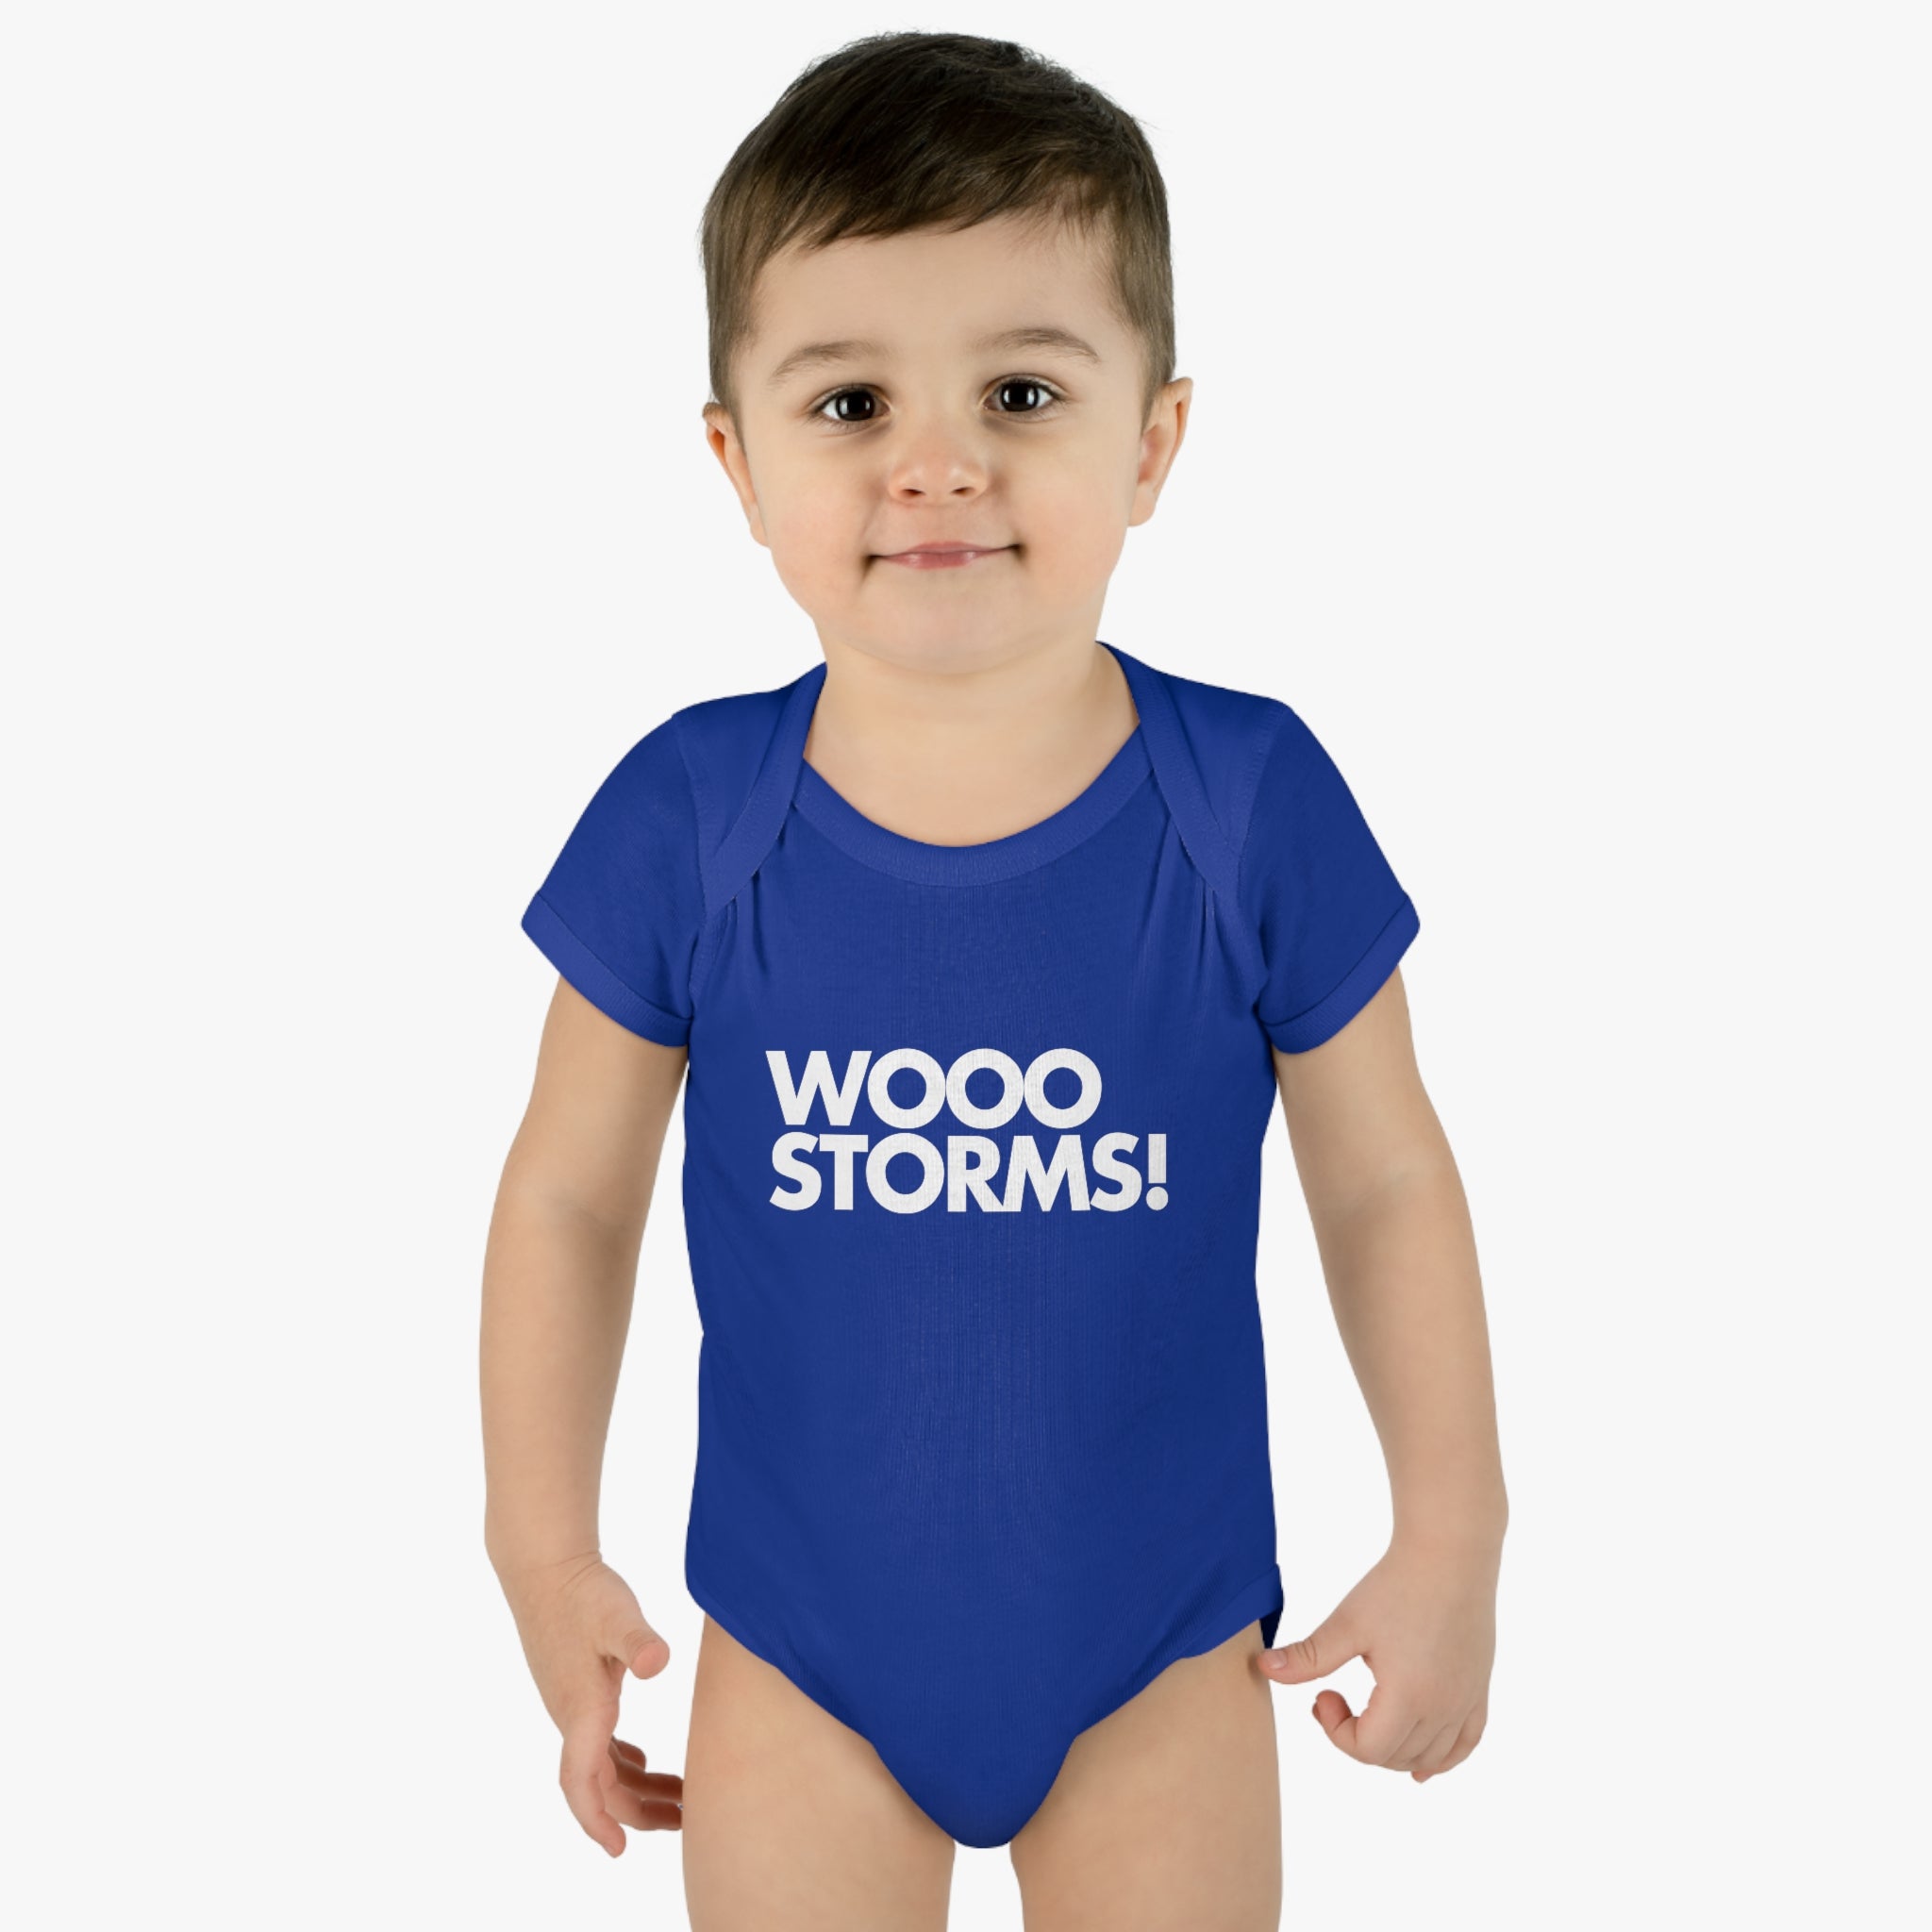 Wooo Storms! Infant Bodysuit 